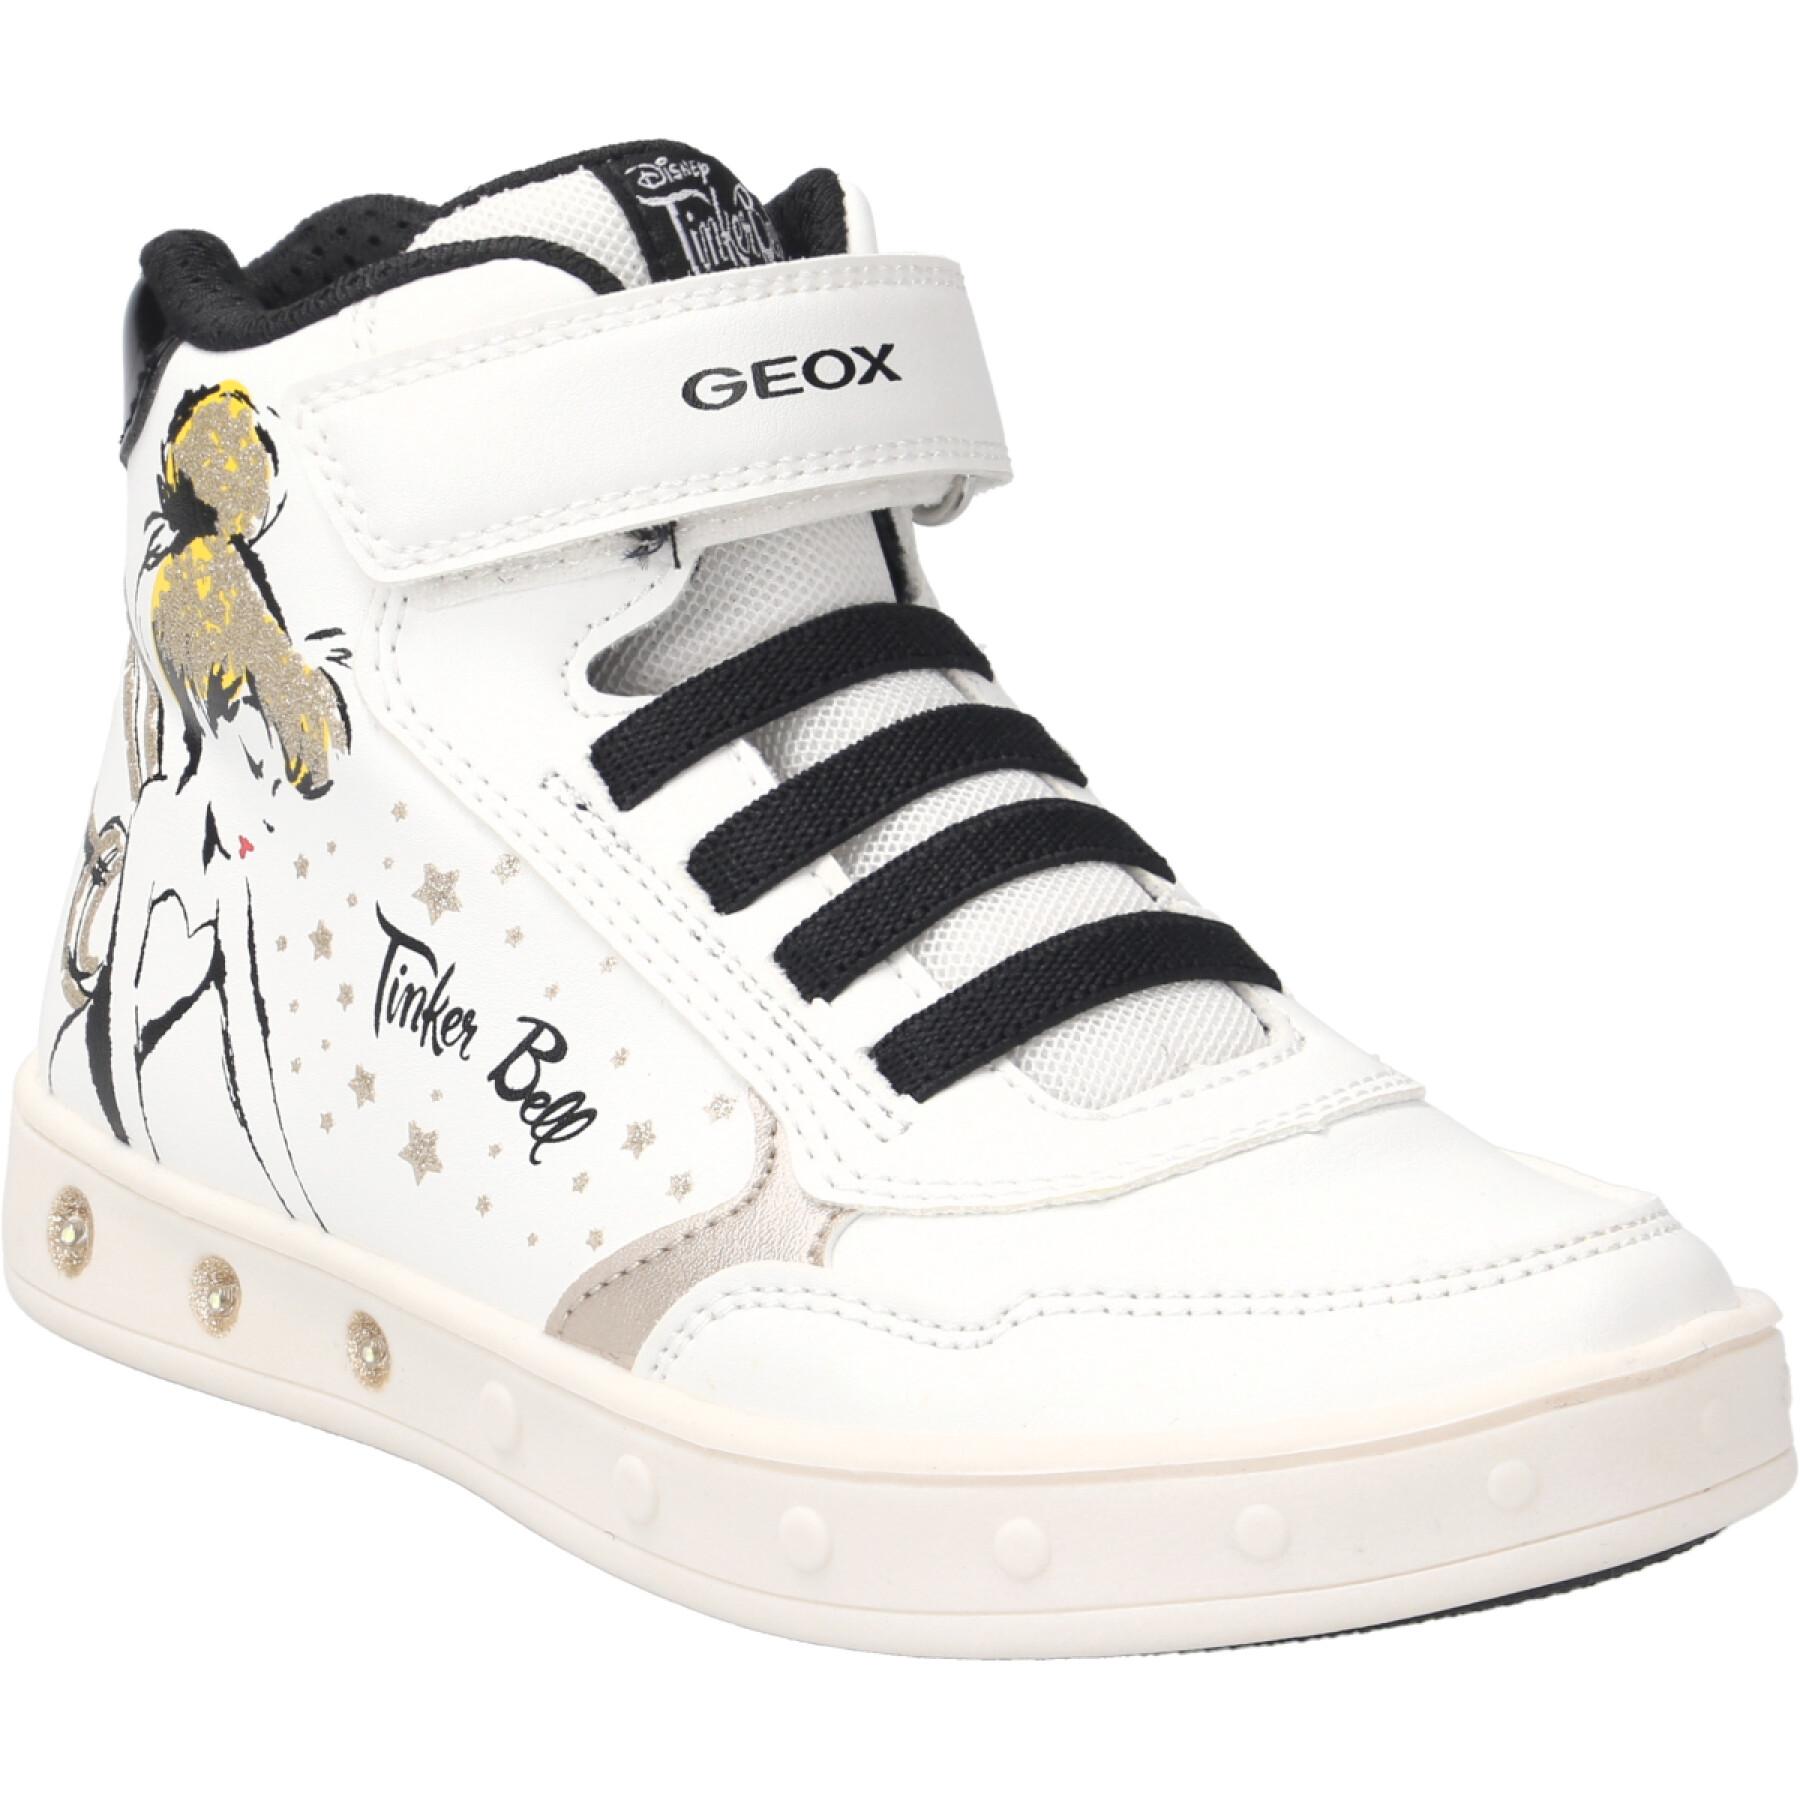 Girl sneakers Geox Skylin